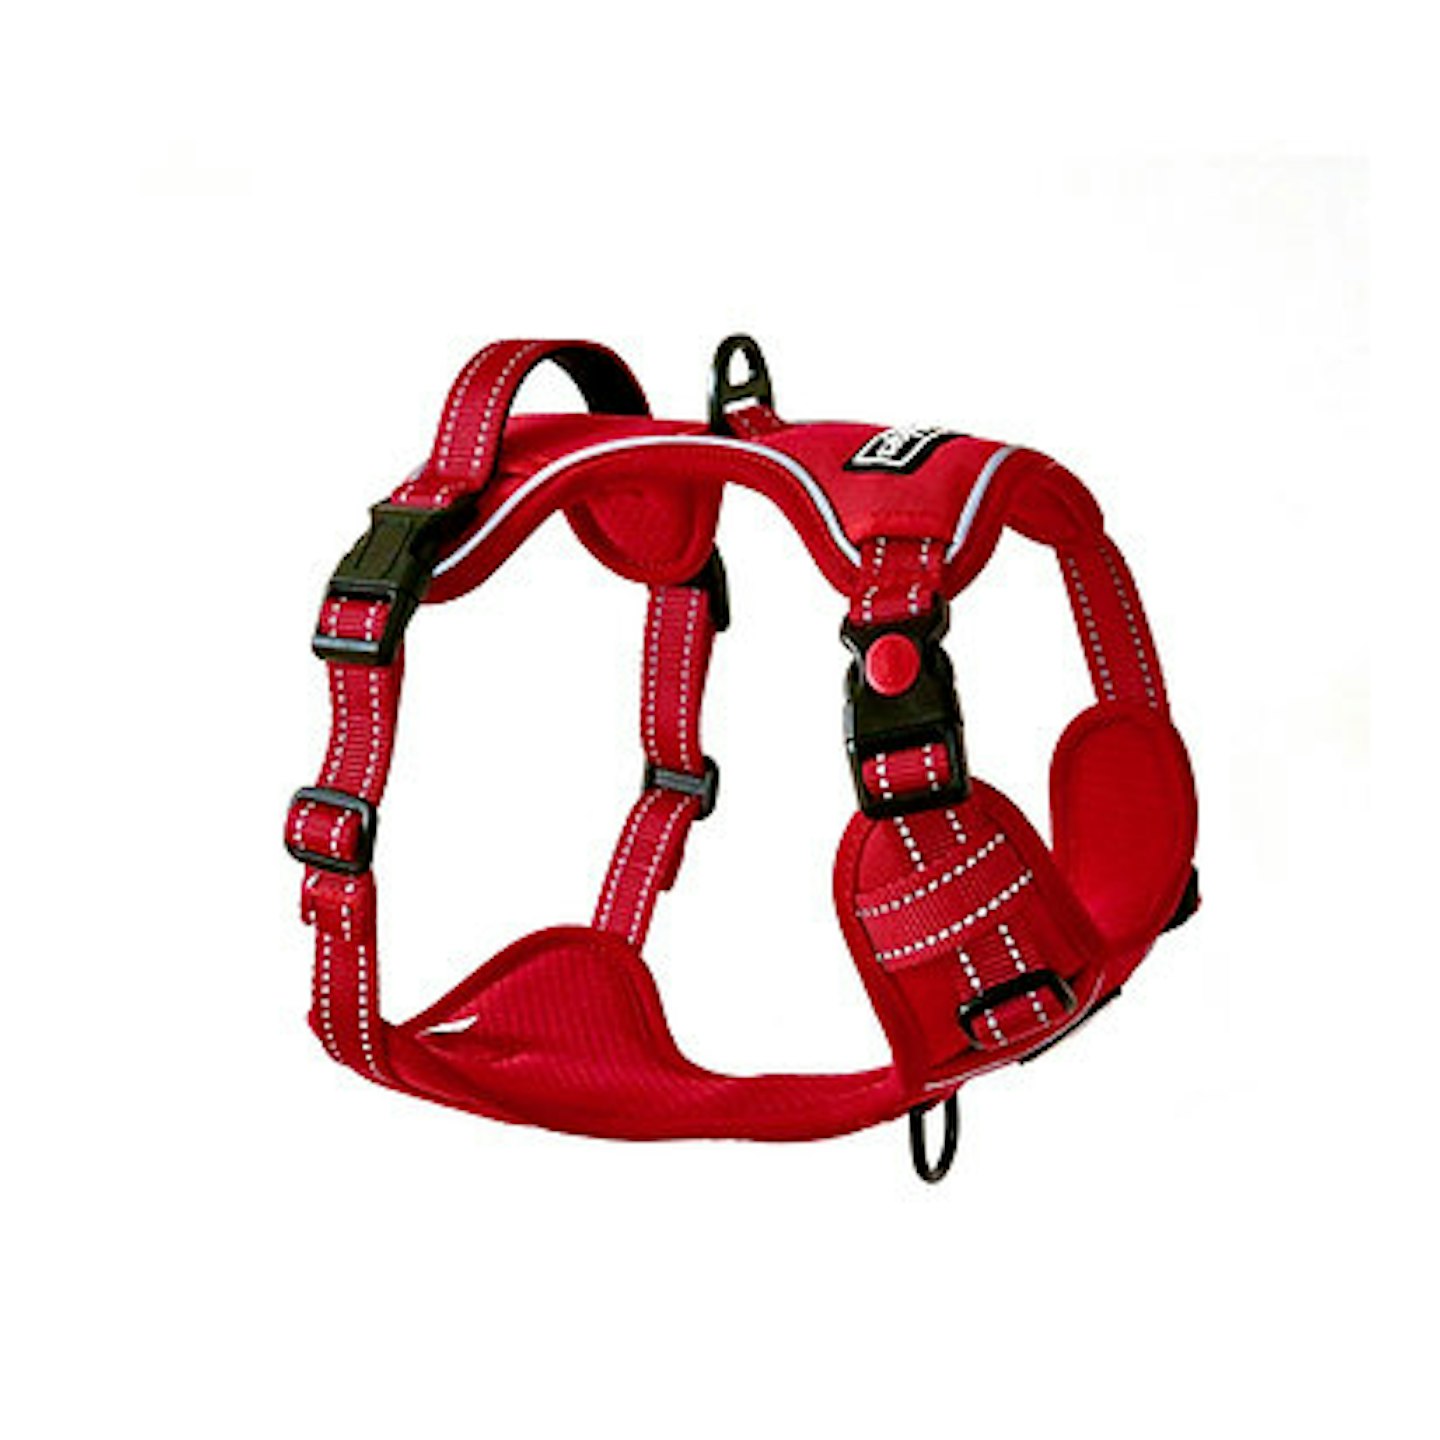 Barkridges Triple buckle premium dog harness